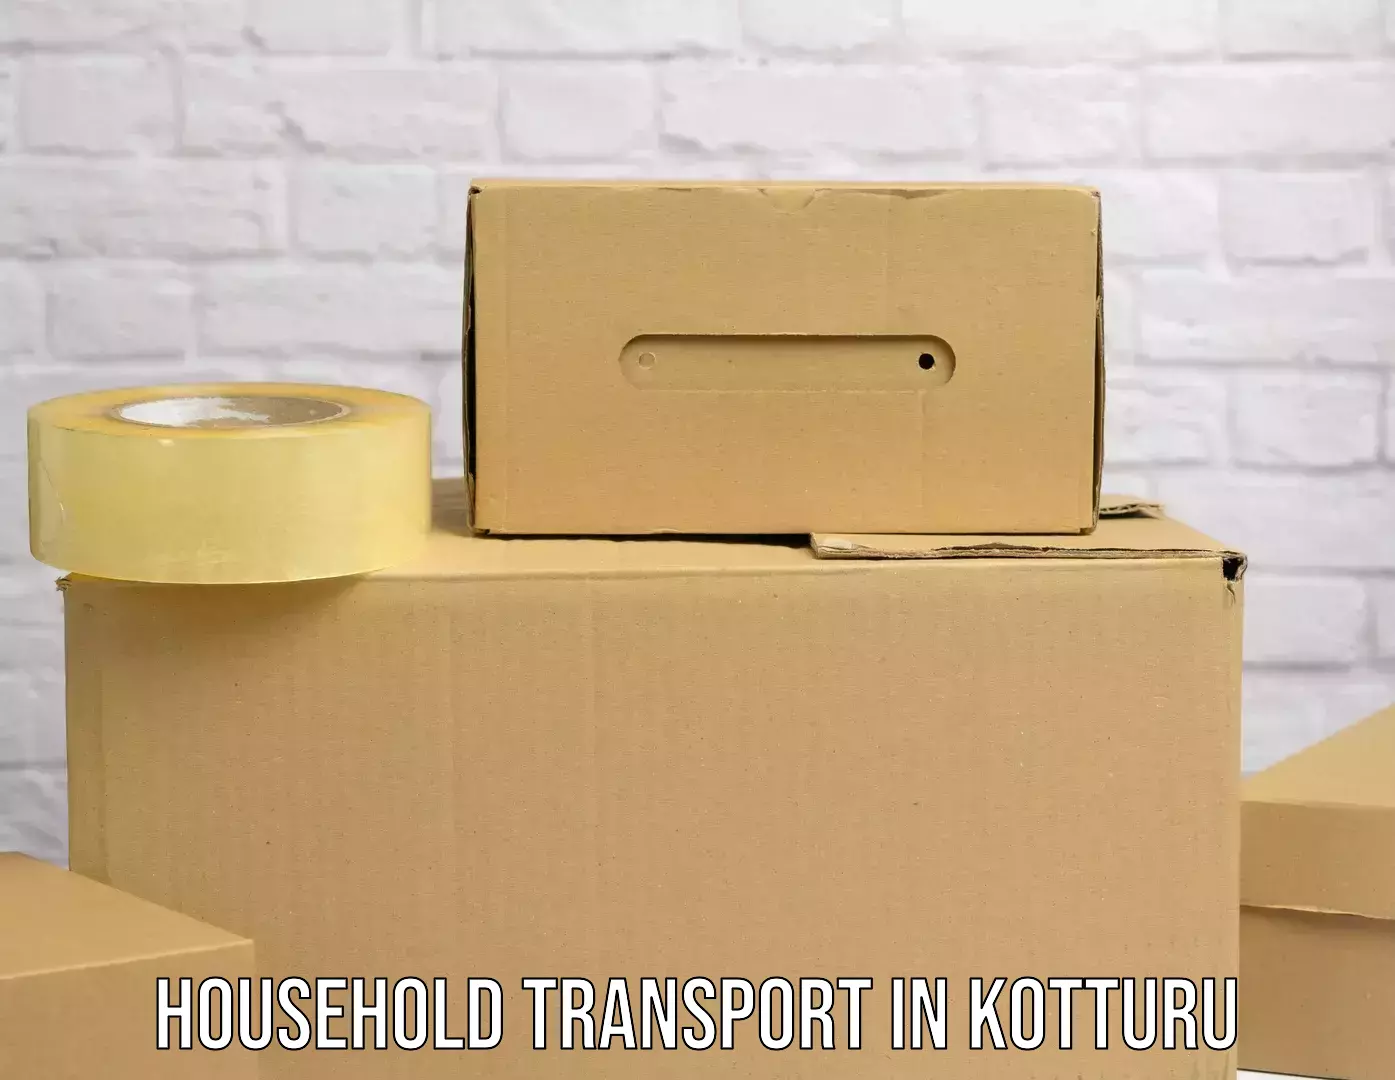 Household transport experts in Kotturu